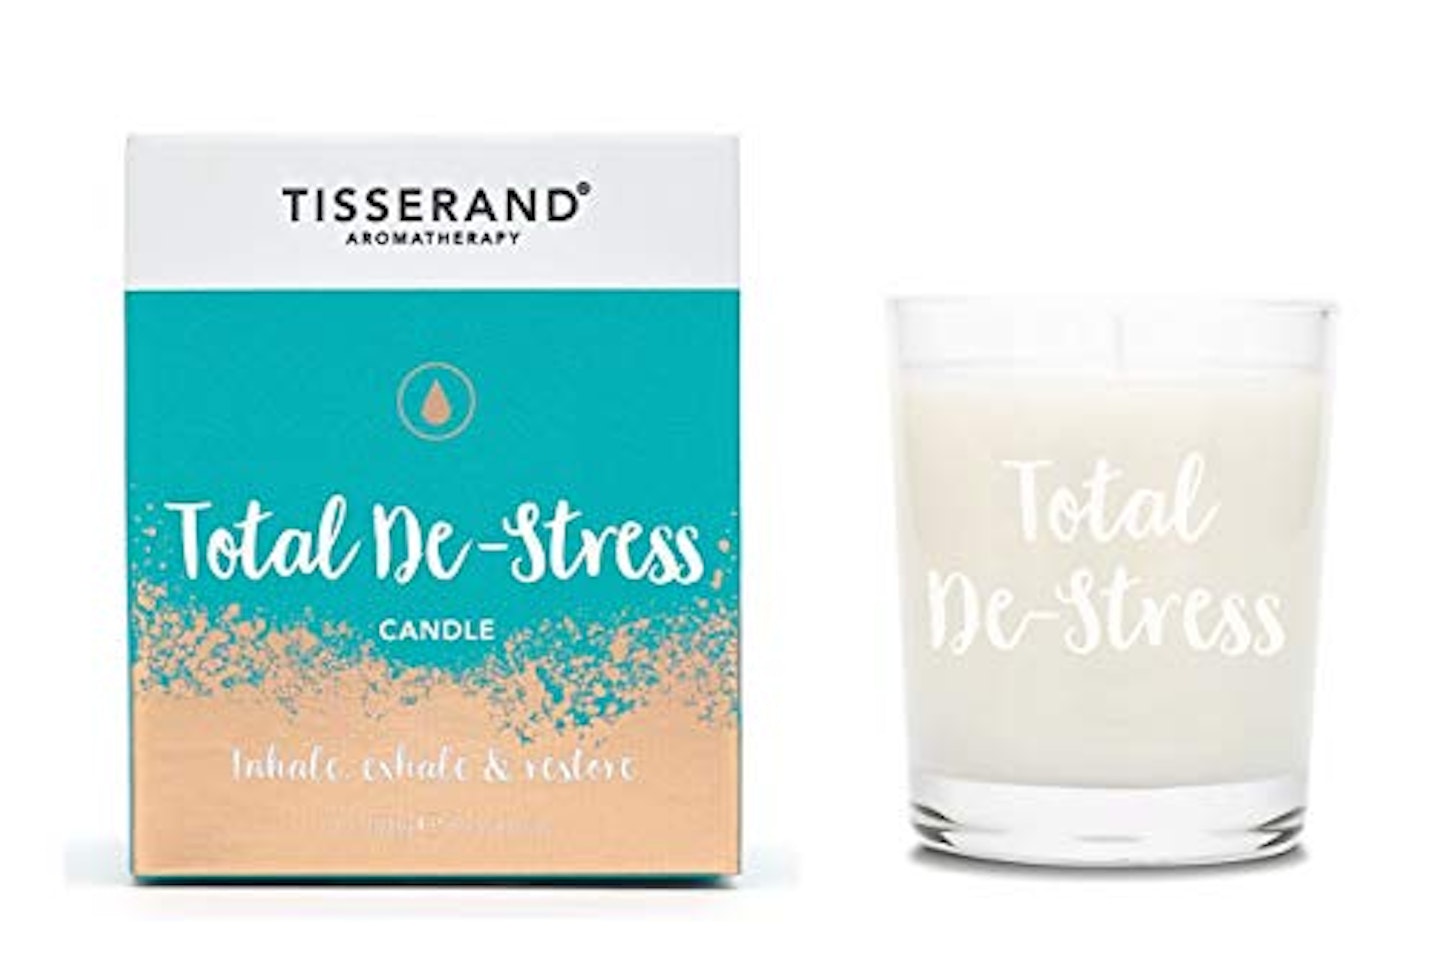 Tisserand Aromatherapy Total De-Stress Candle 